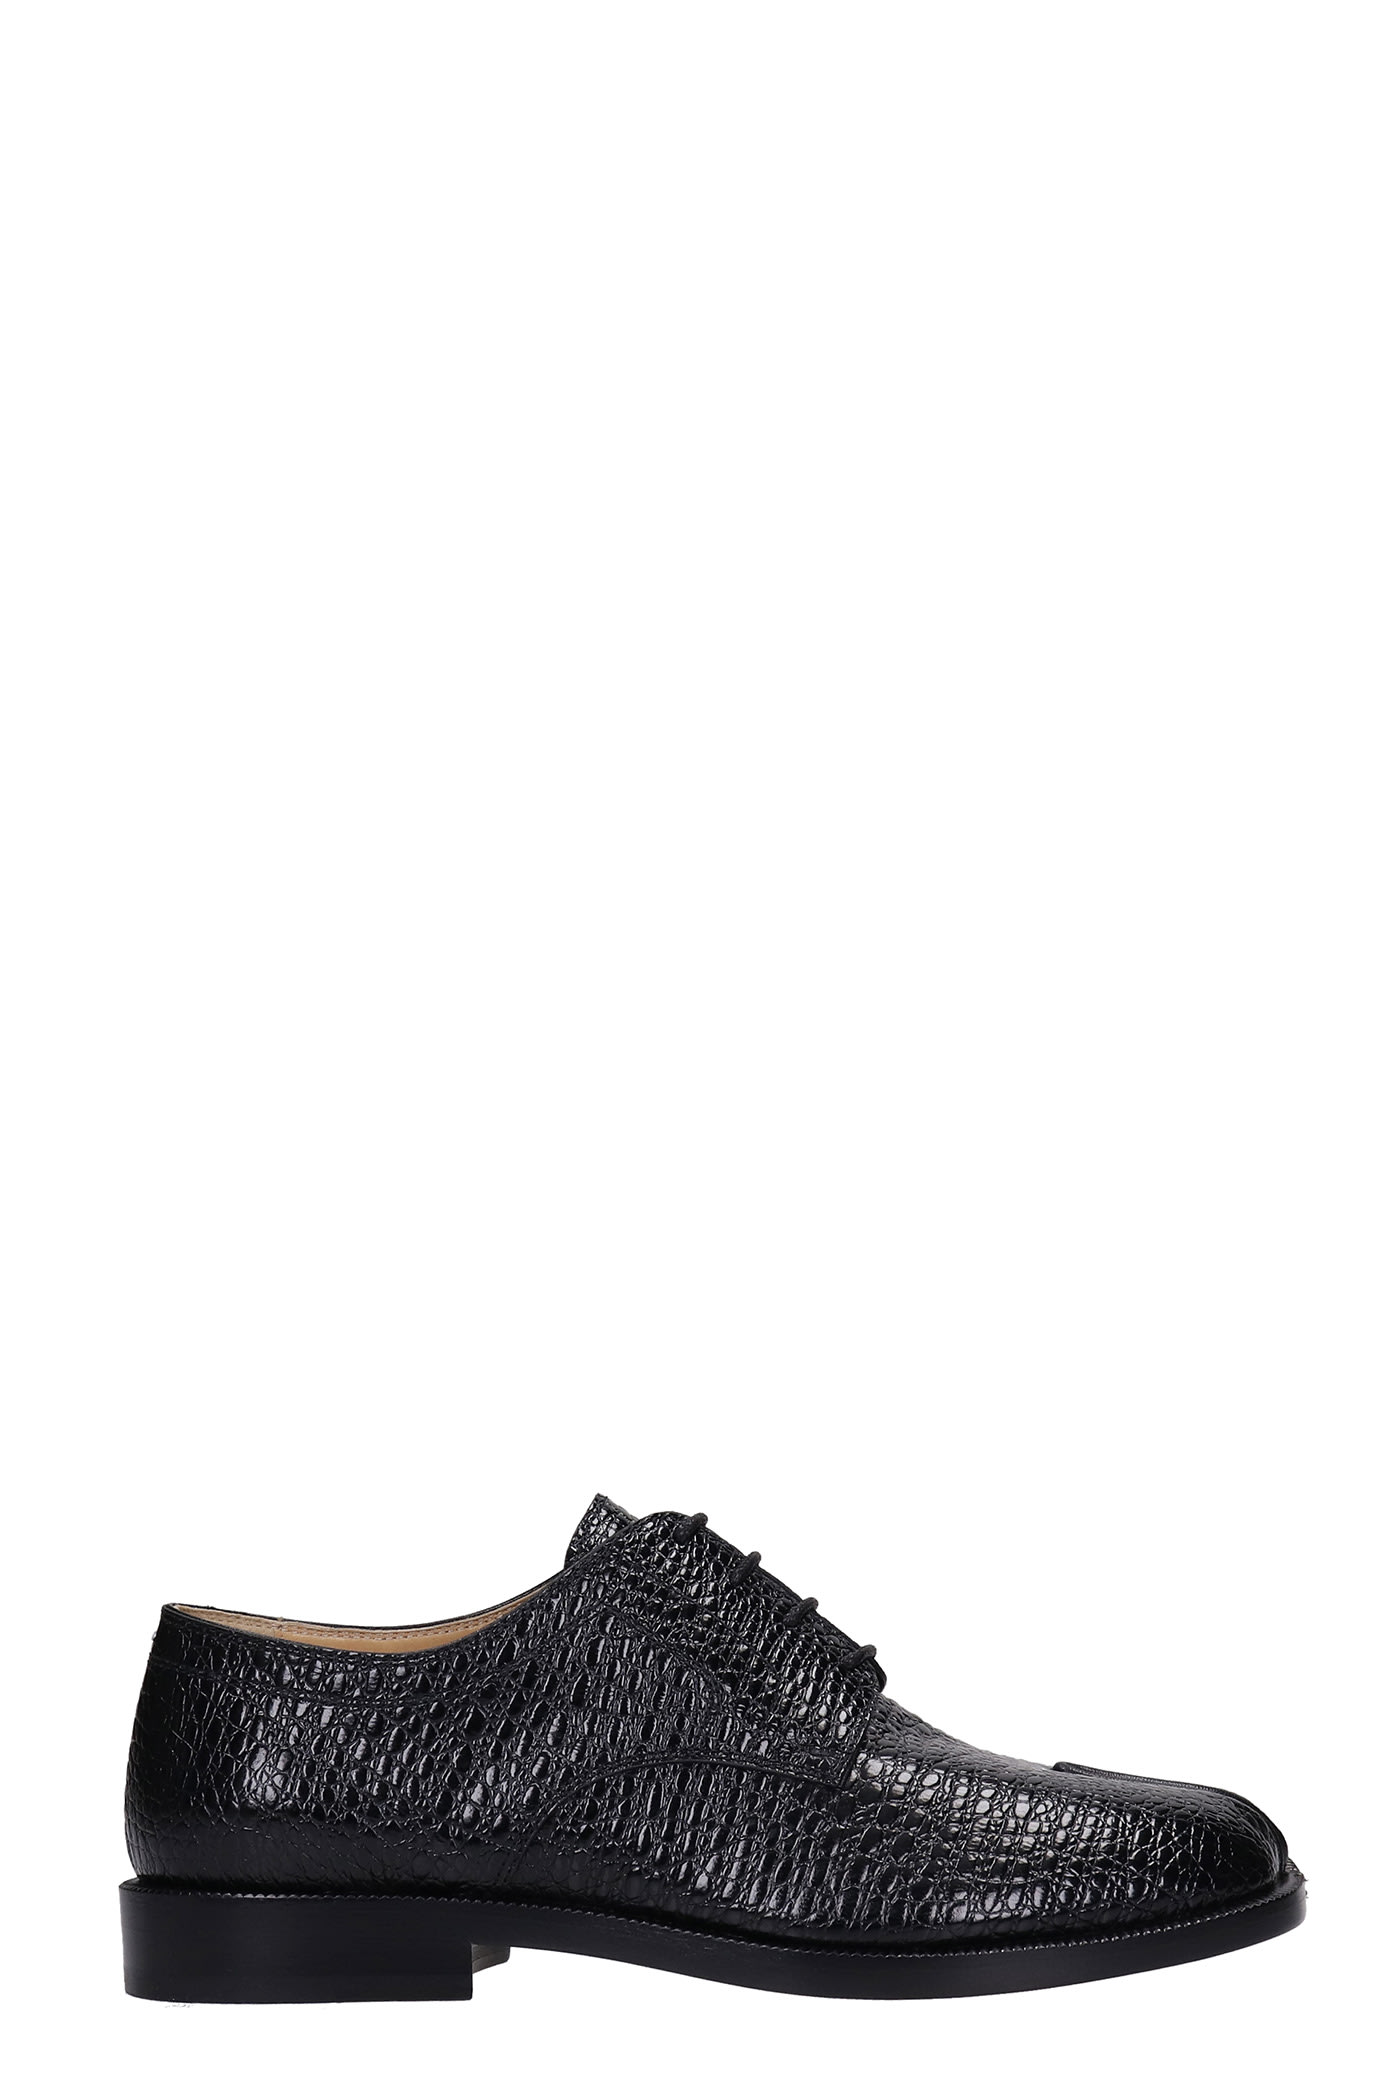 Maison Margiela Lace Up Shoes In Black Leather